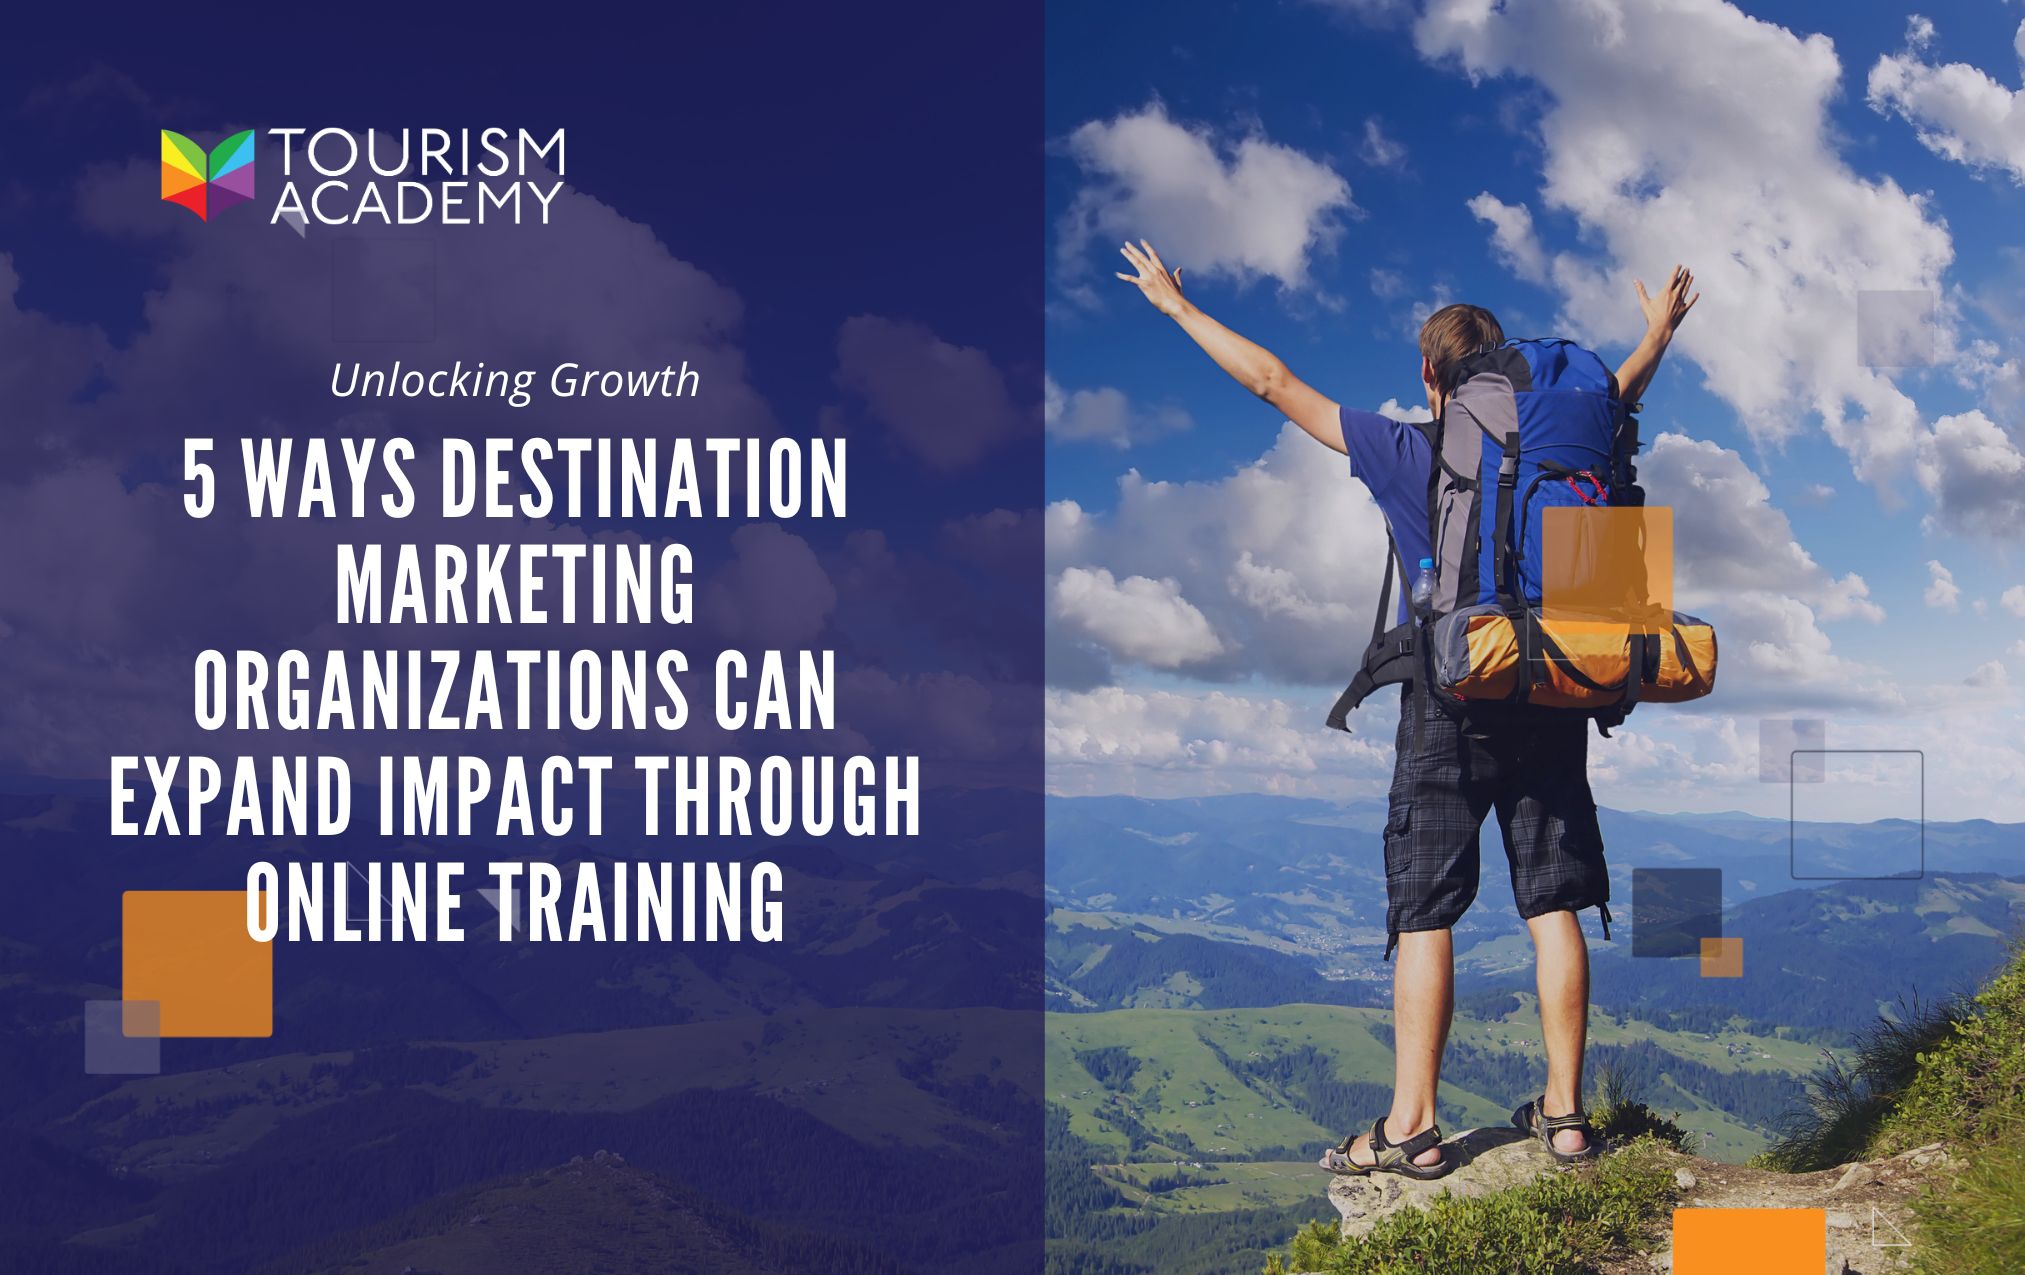 5 Ways Destination Marketing Organizations Can Expand Impact Through Online Training